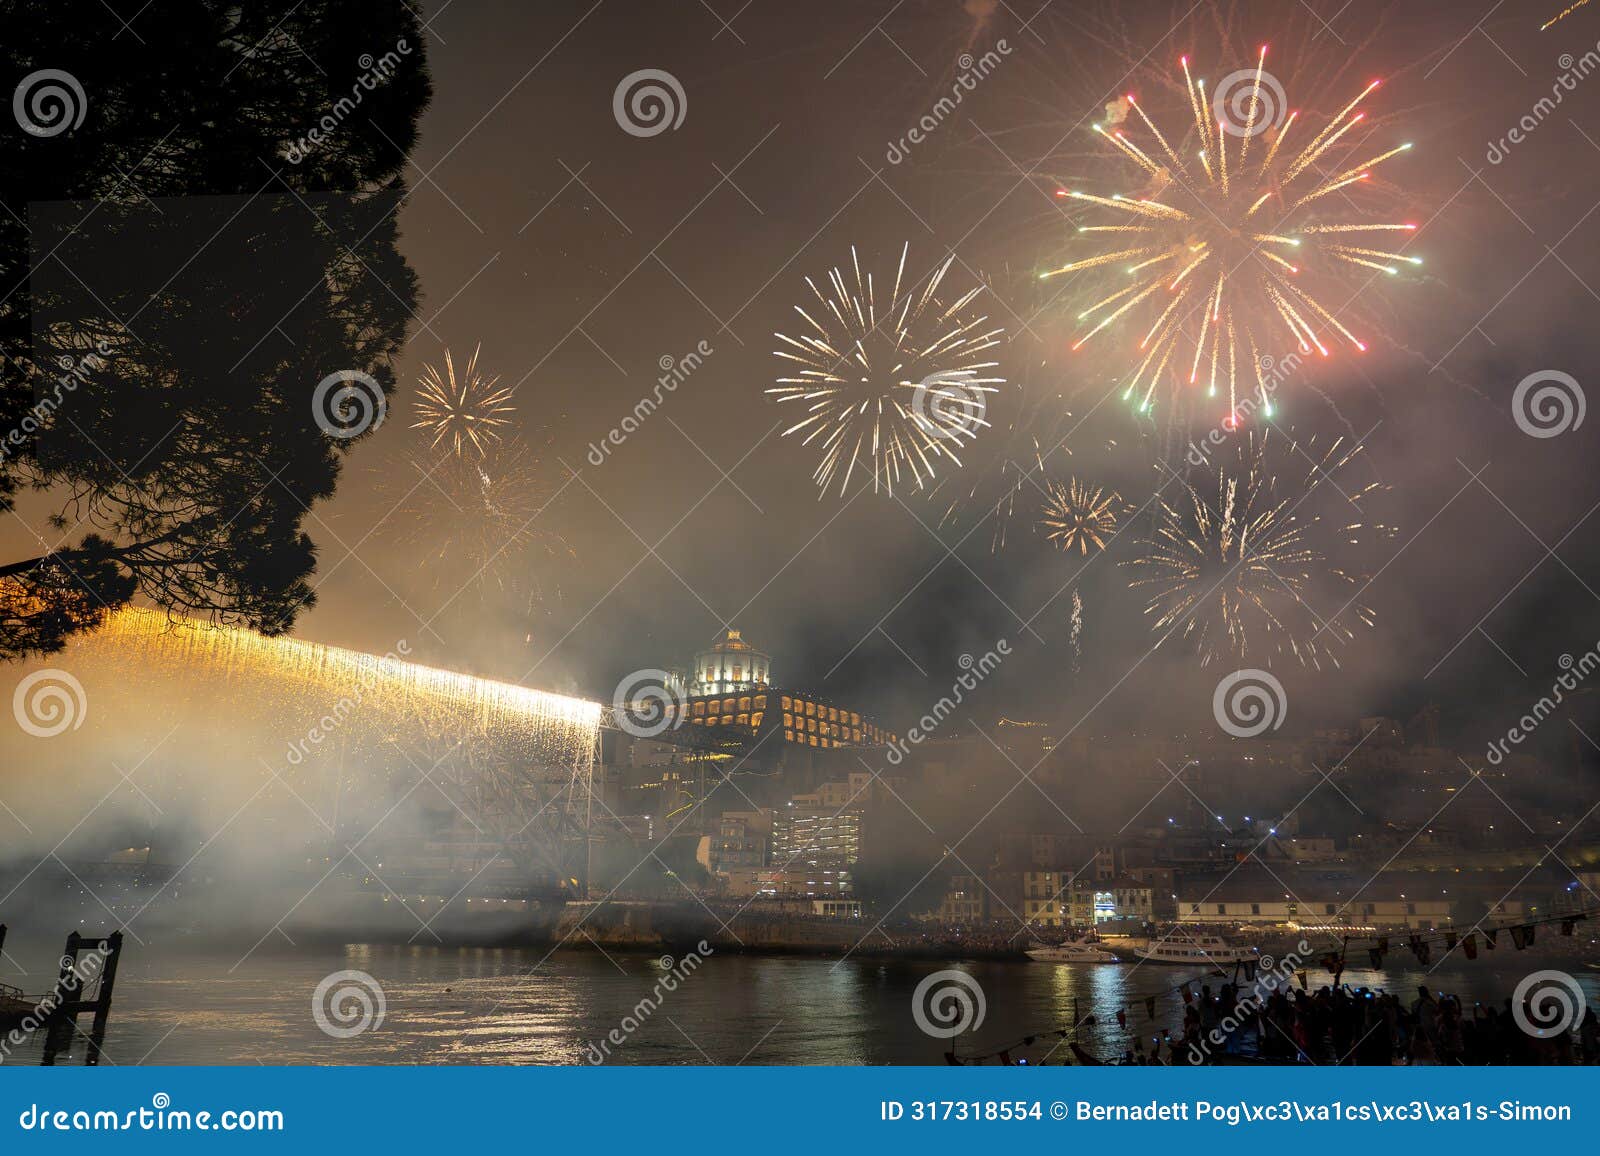 colorful beautiful fireworks over douro river in porto portugal on sao joao festival